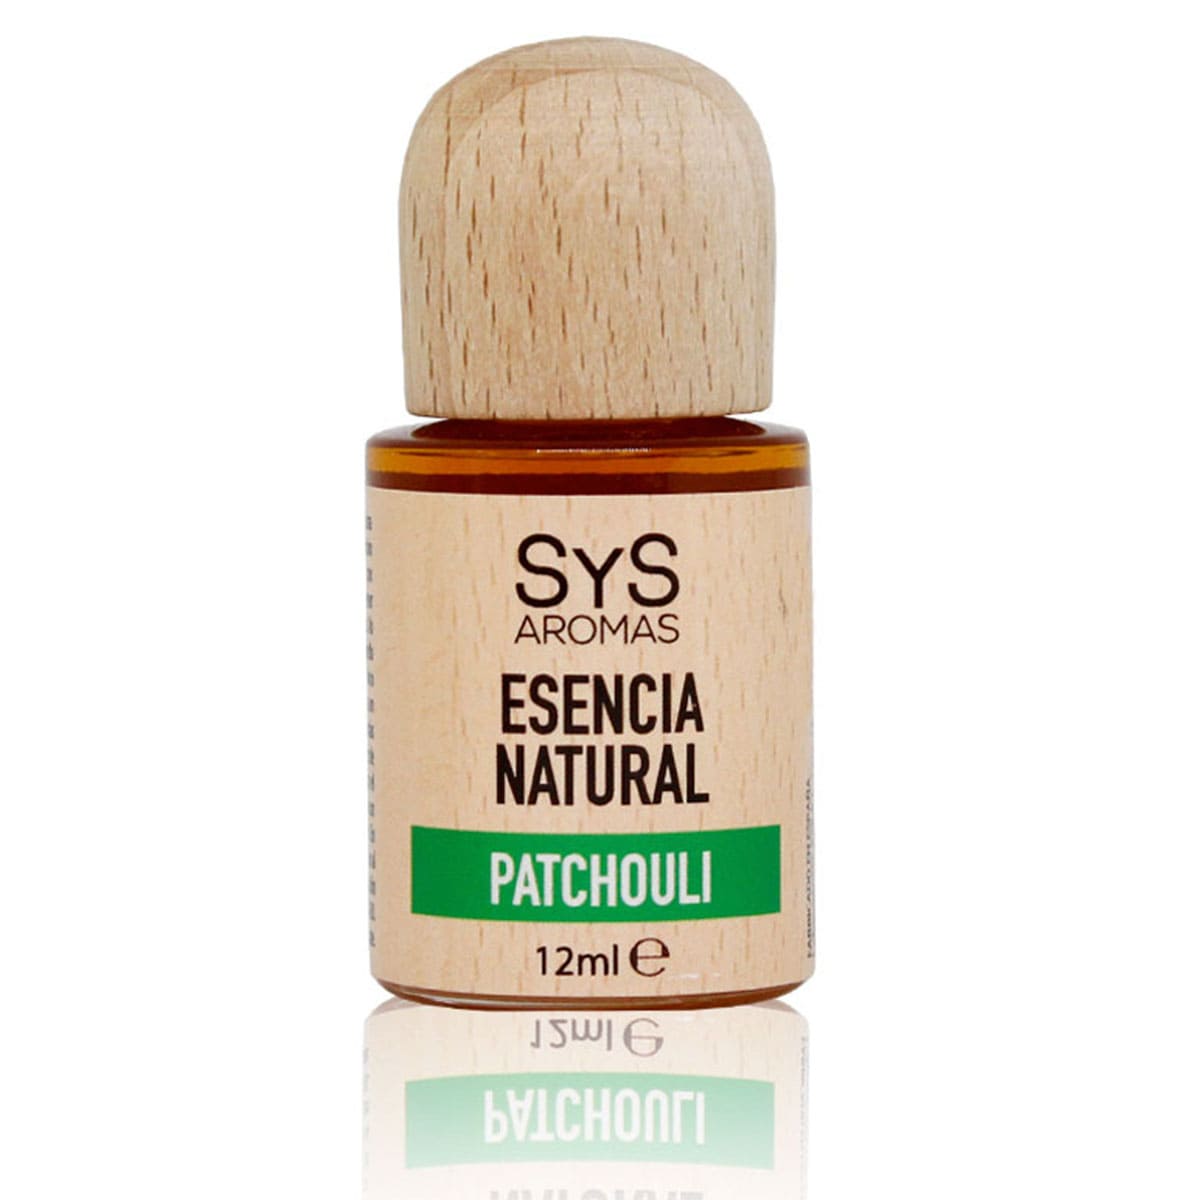 Buy Patchouli Essence 12ml SYS Aromas